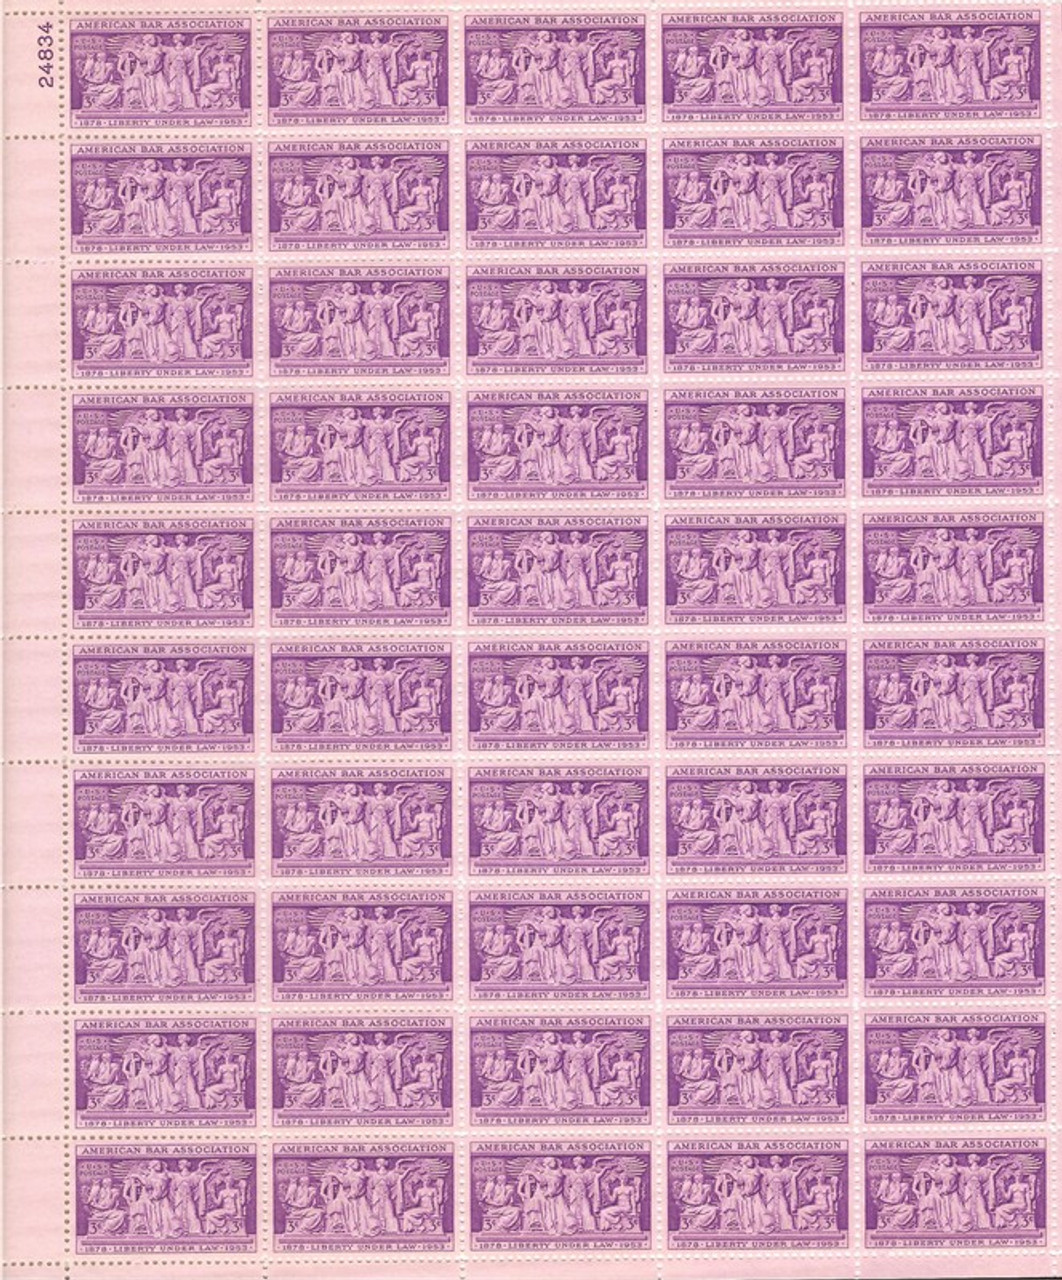 US Stamp - 1953 Louisiana Purchase - 50 Stamp Sheet - Scott #1020